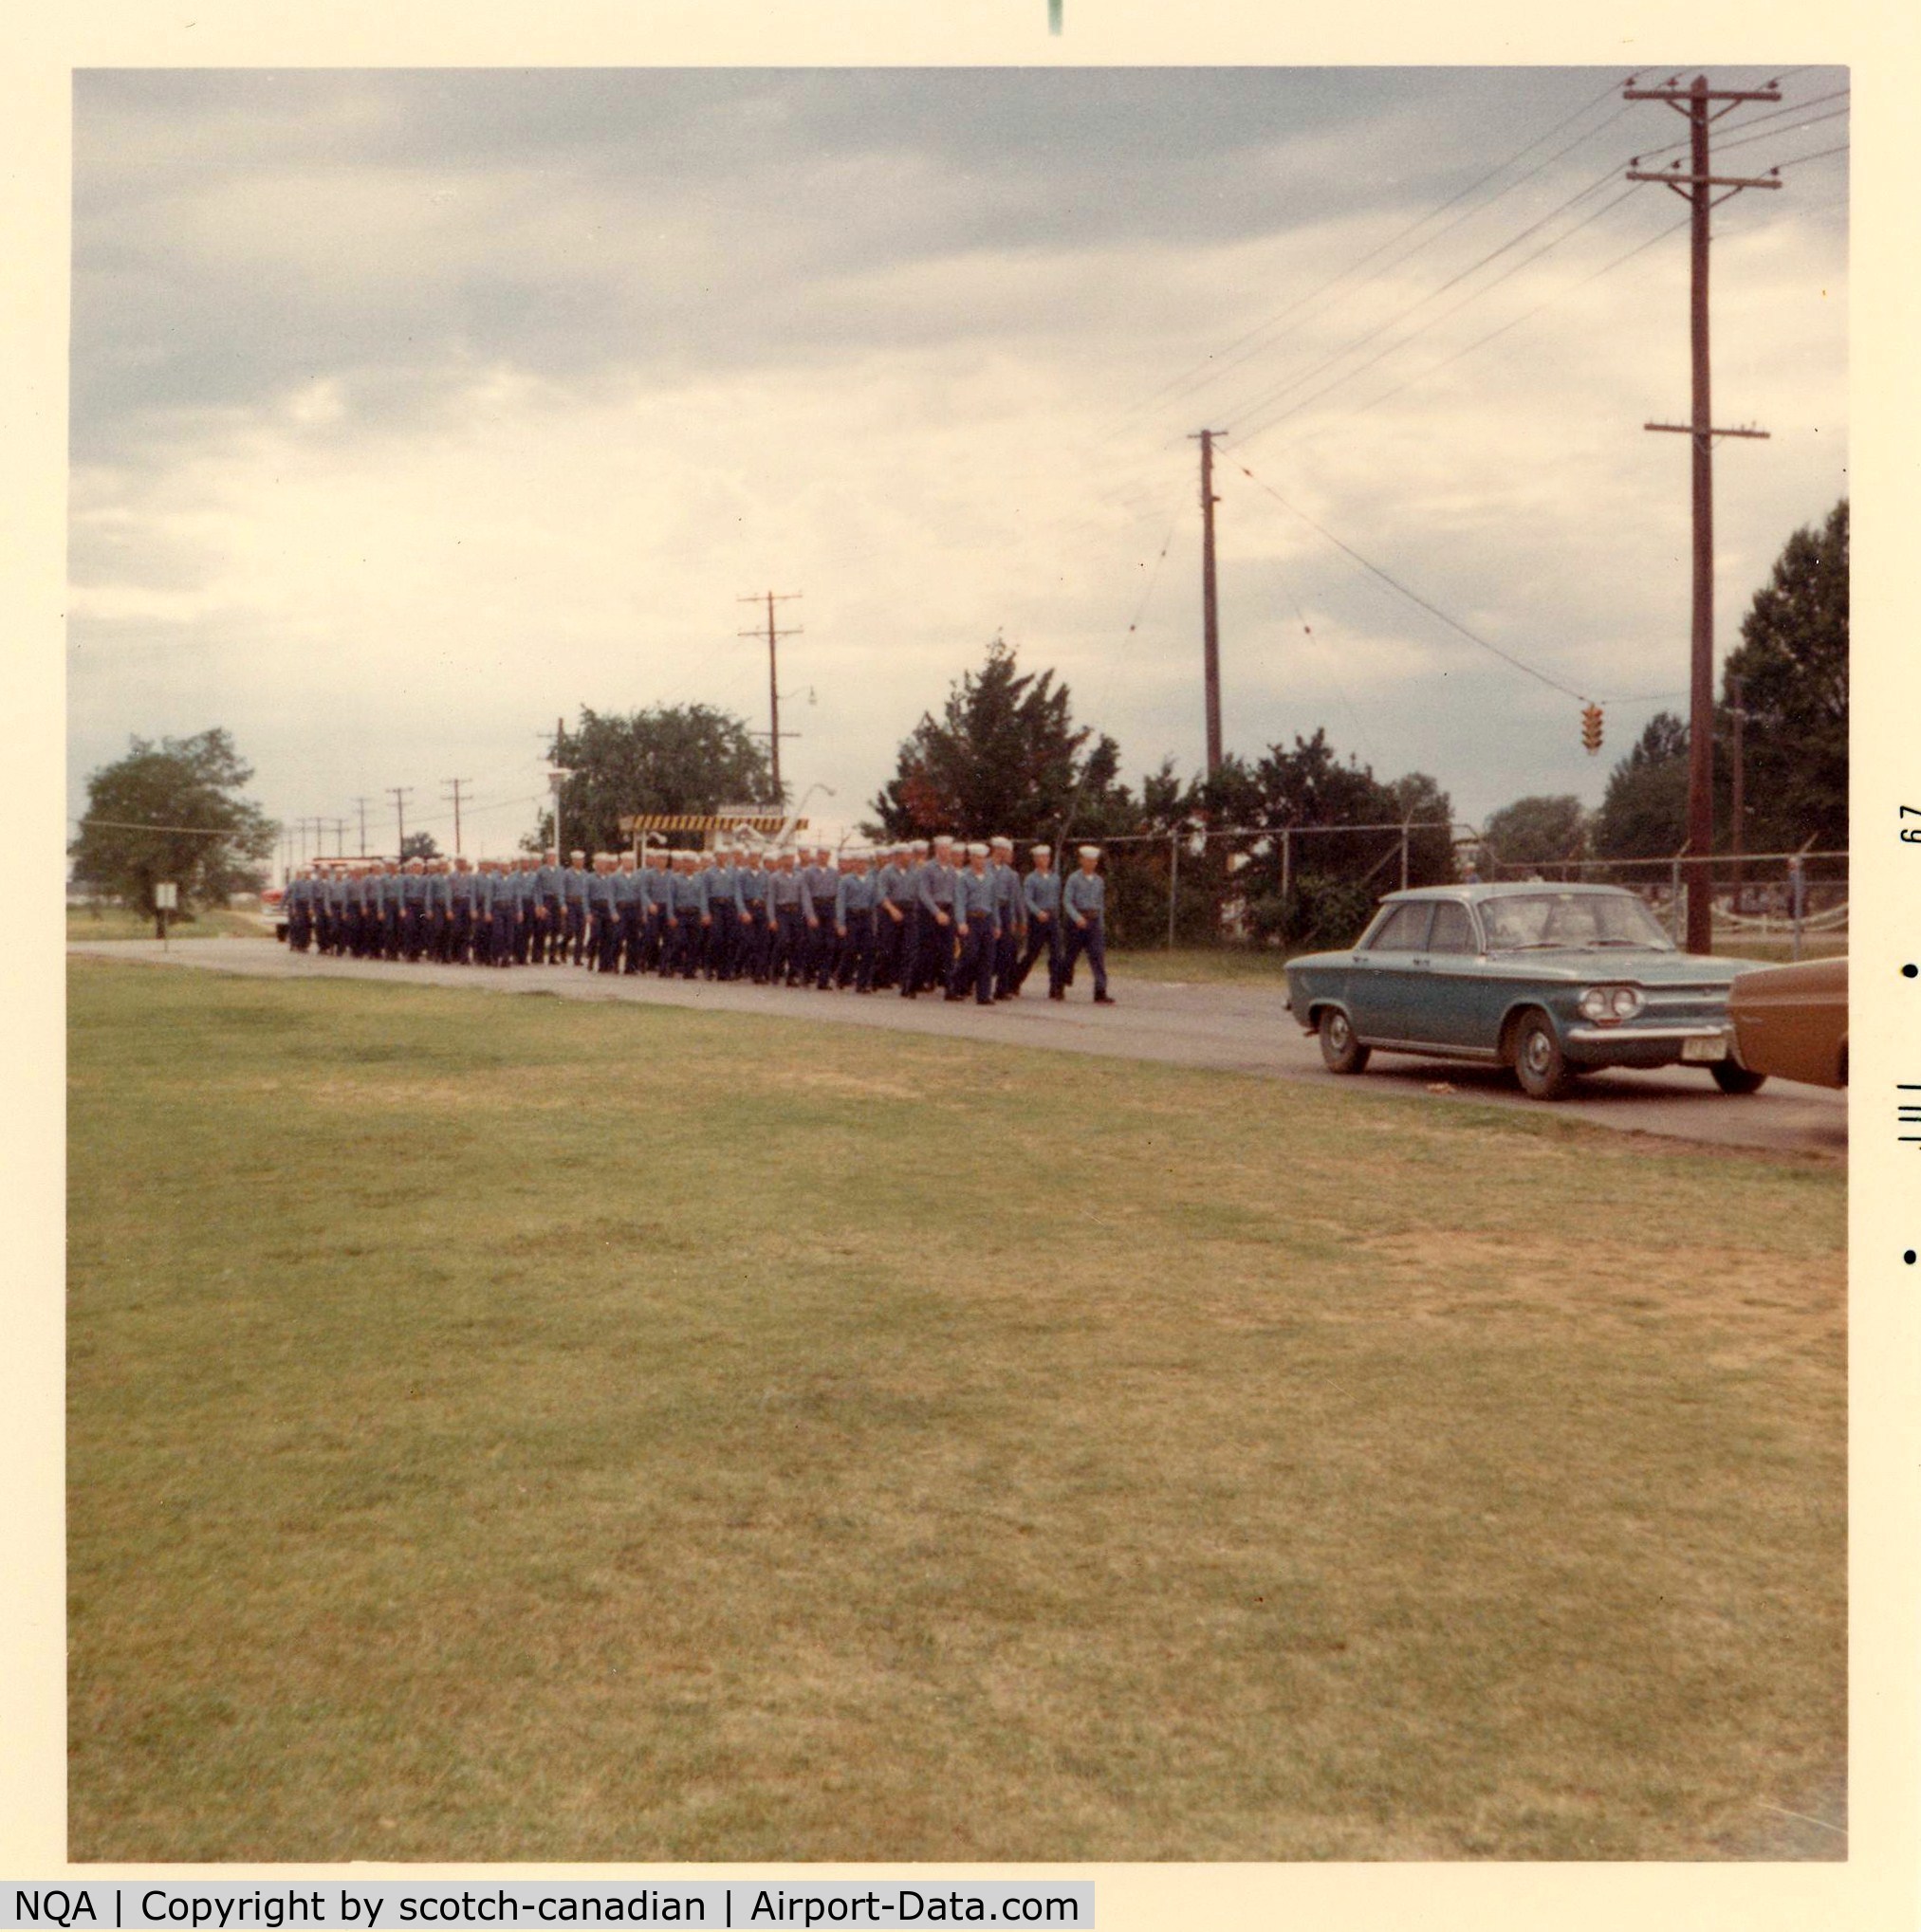 Millington Regional Jetport Airport (NQA) - Marching to the Mess Hall at Naval Air Station - Memphis, Millington, TN - 1967